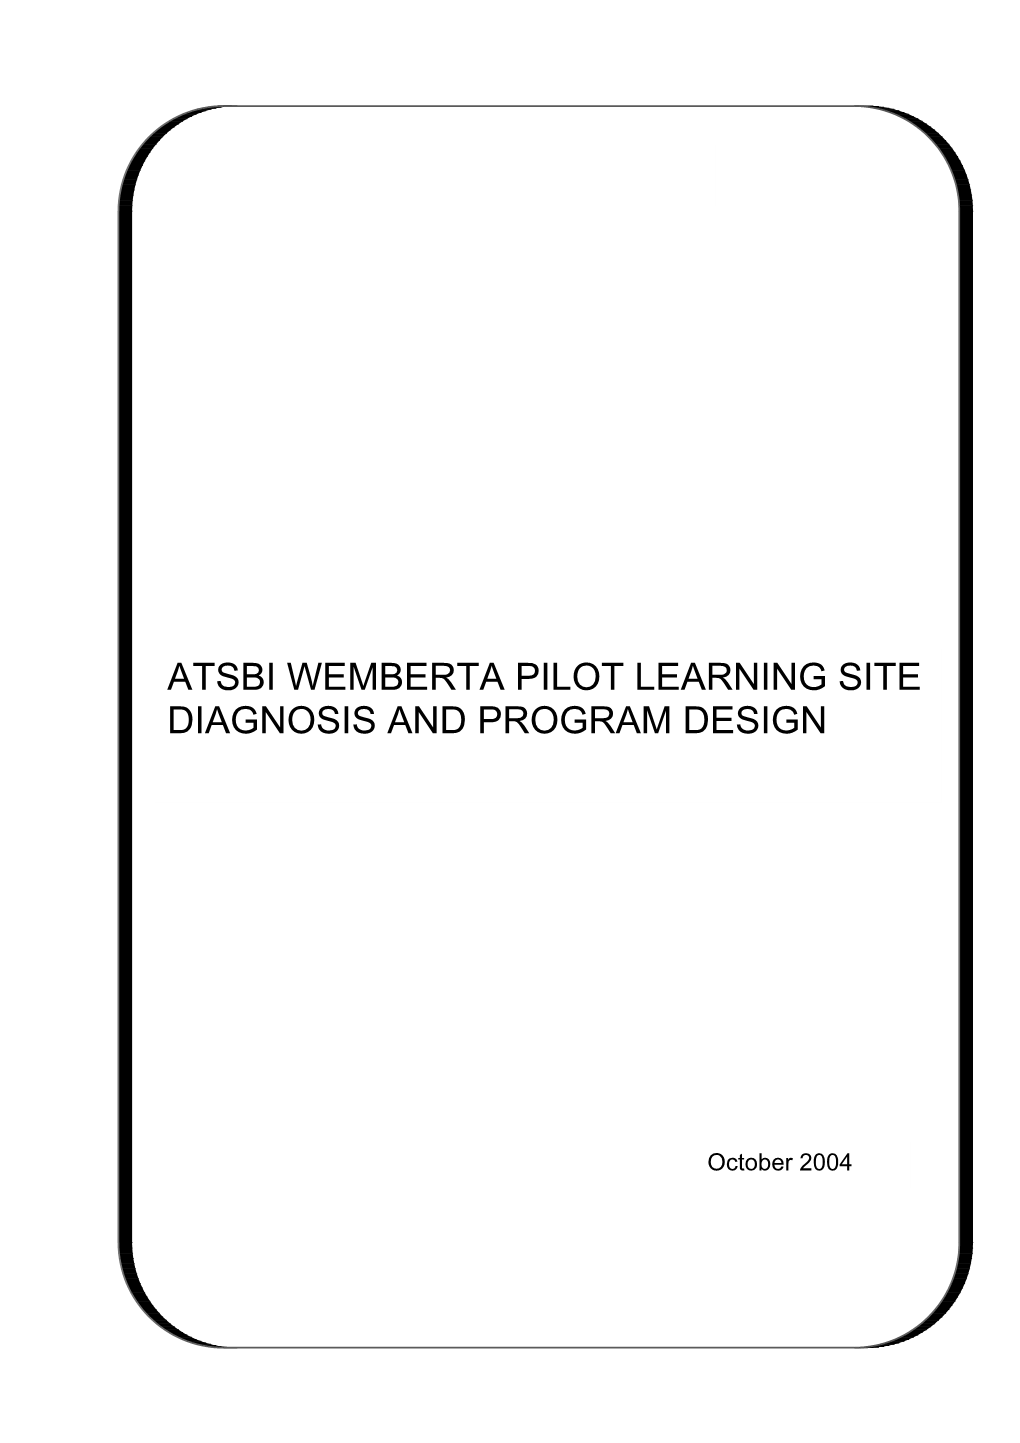 Atsbi Wemberta Pilot Learning Site Diagnosis and Program Design